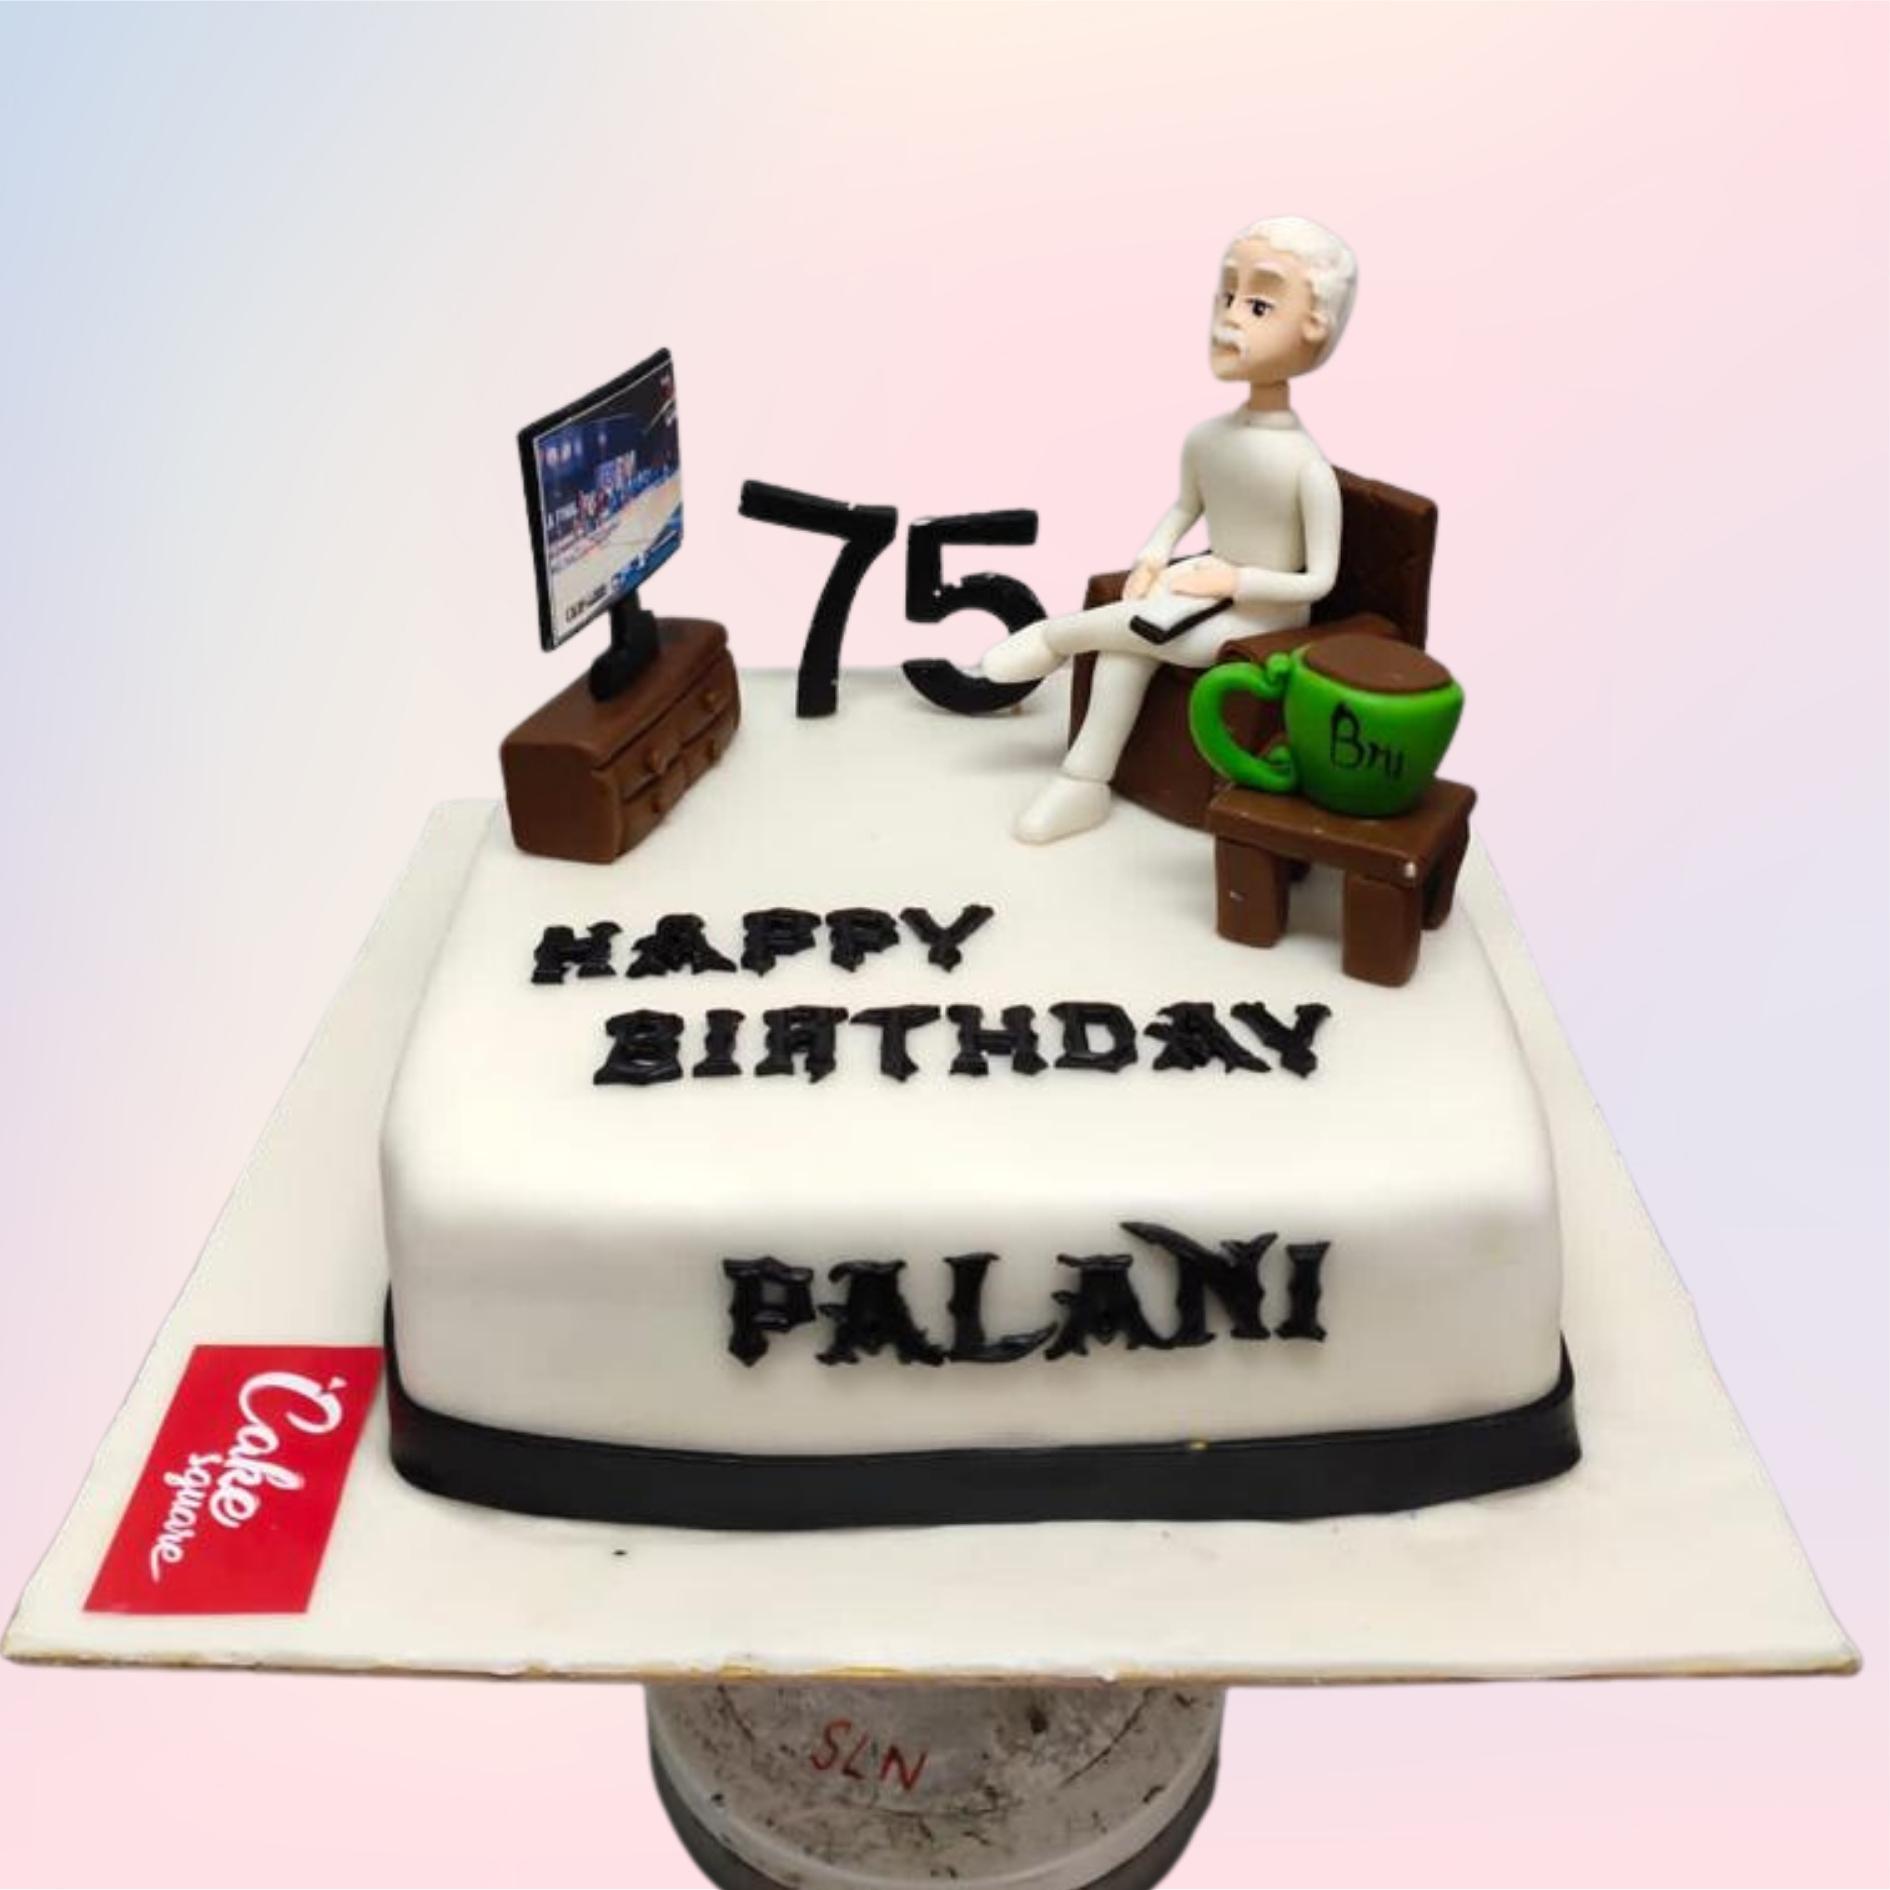 75th Birthday Customised Cake For Men 164 - Cake Square Chennai